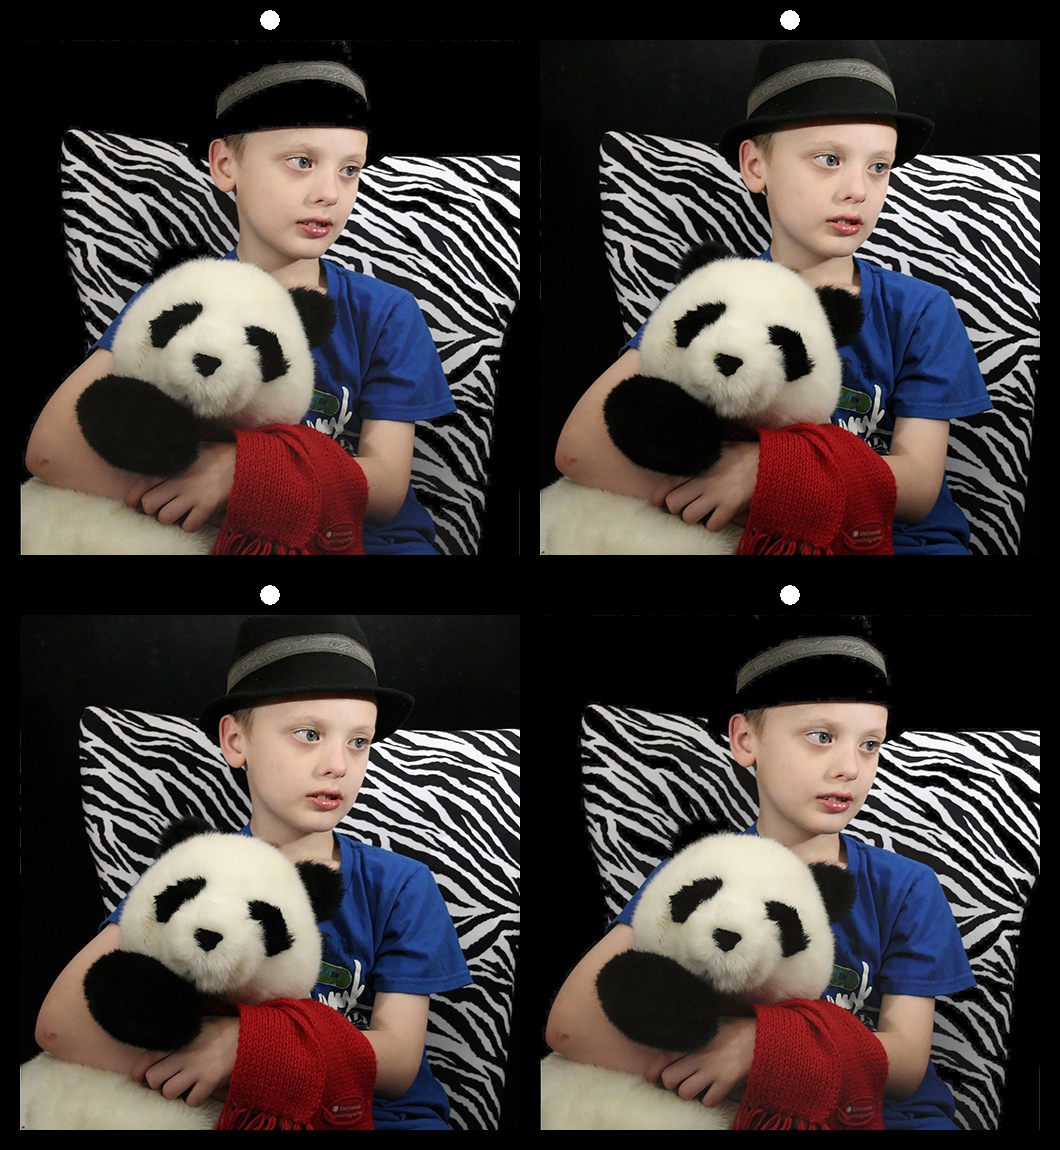 Luke and Panda by David Allen, EPSA